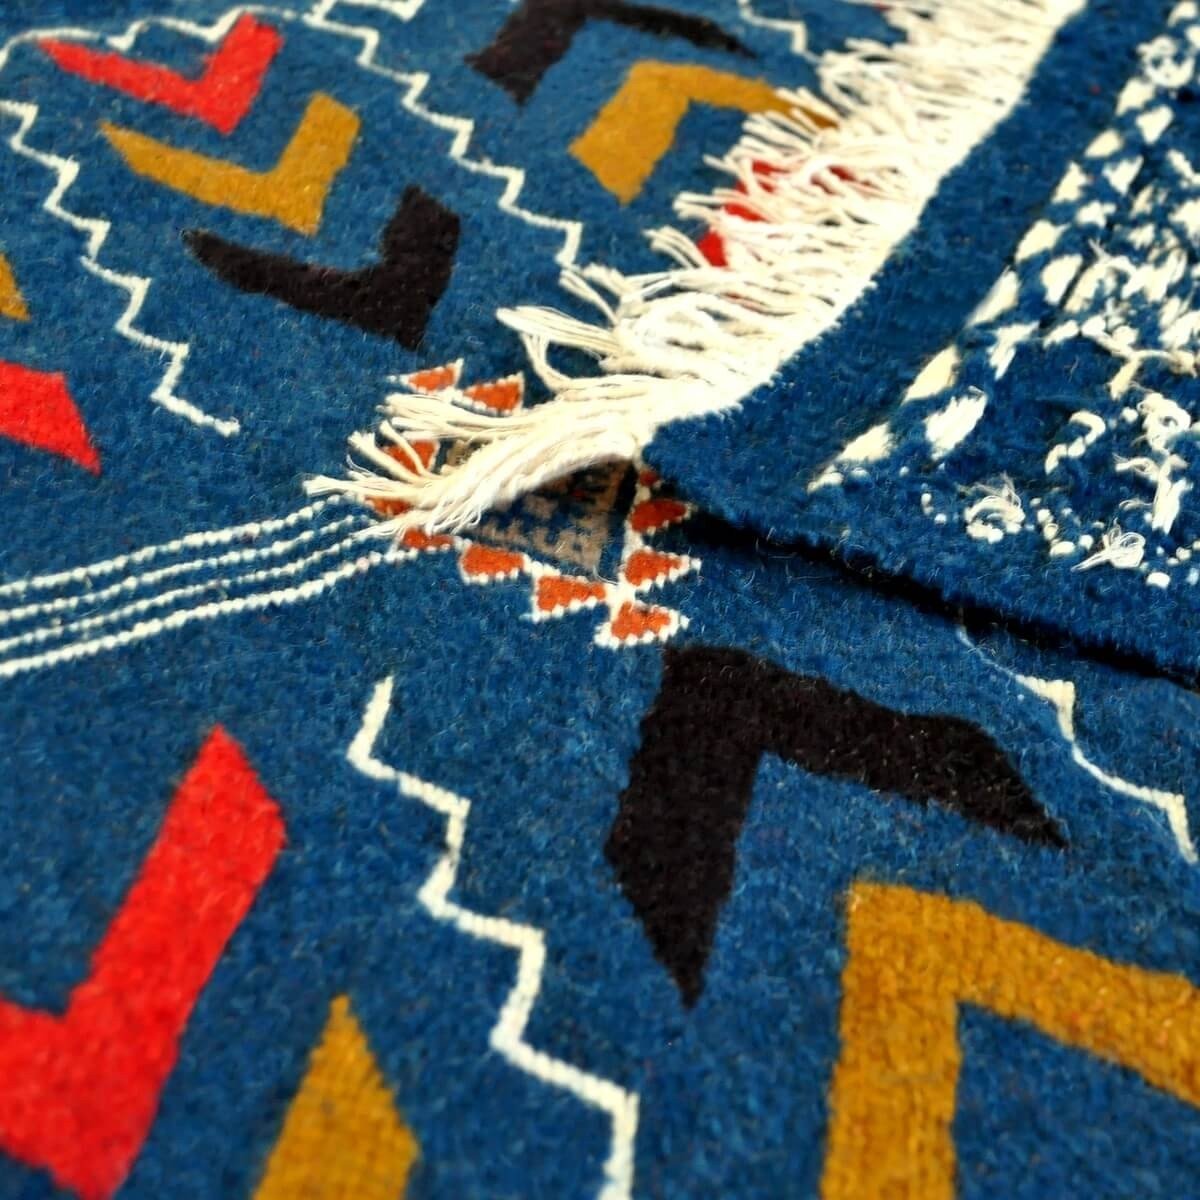 Berber tapijt Tapijt Kilim lang Ben Aoun 65x230 Blauw (Handgeweven, Wol, Tunesië) Tunesisch kilimdeken, Marokkaanse stijl. Recht